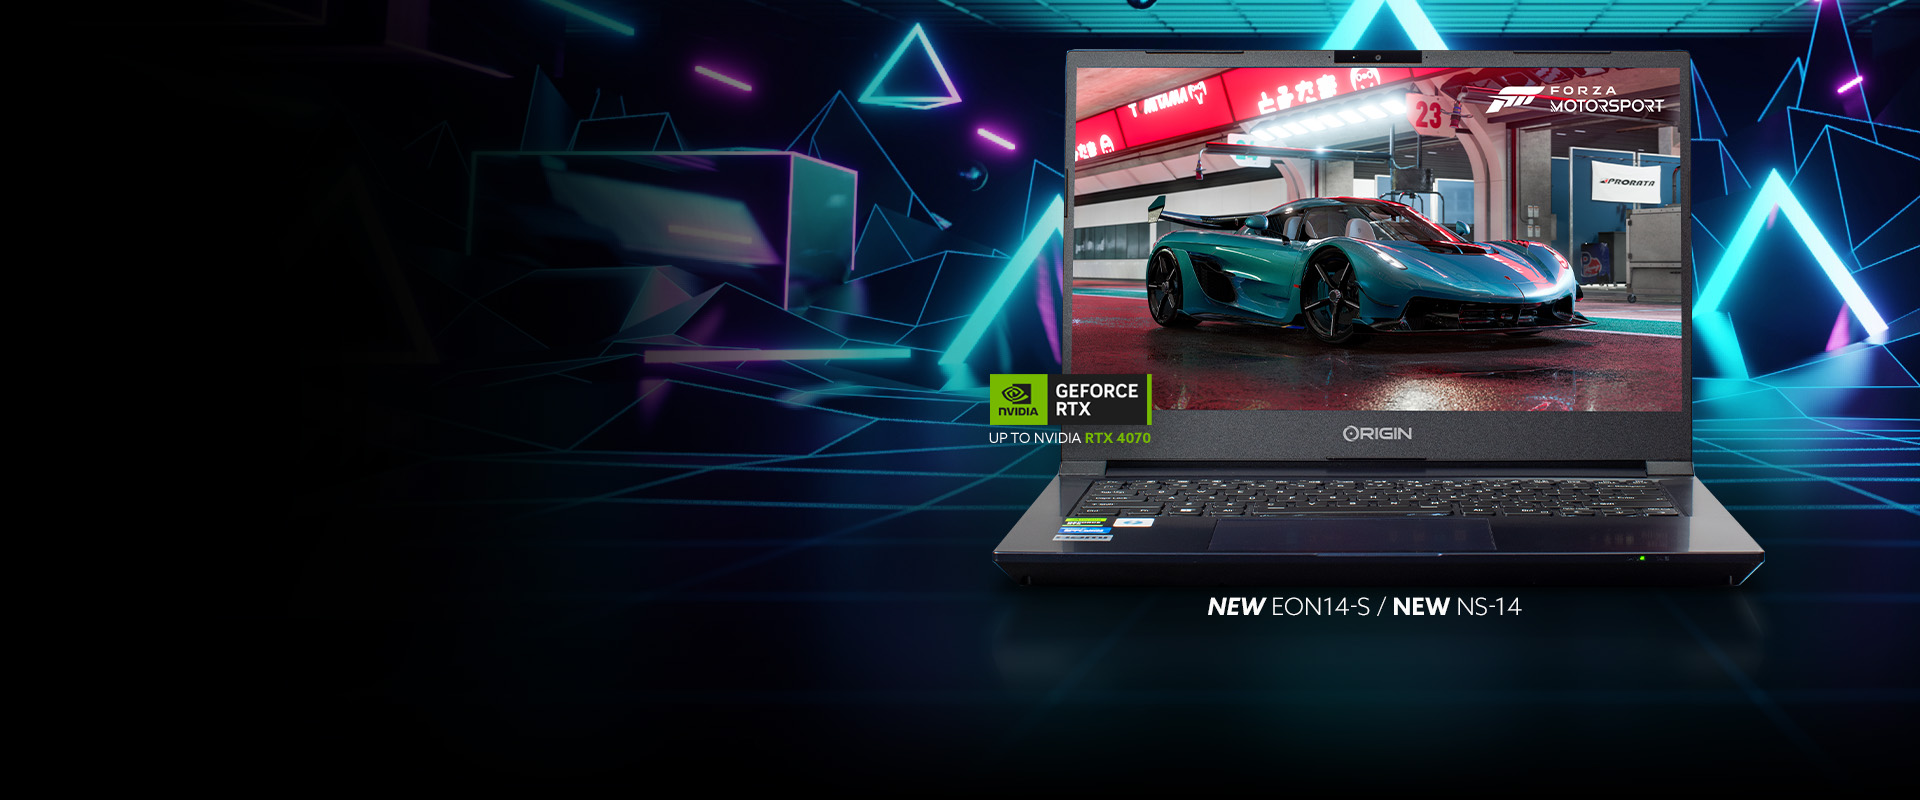 New EON14-S Gaming Laptop